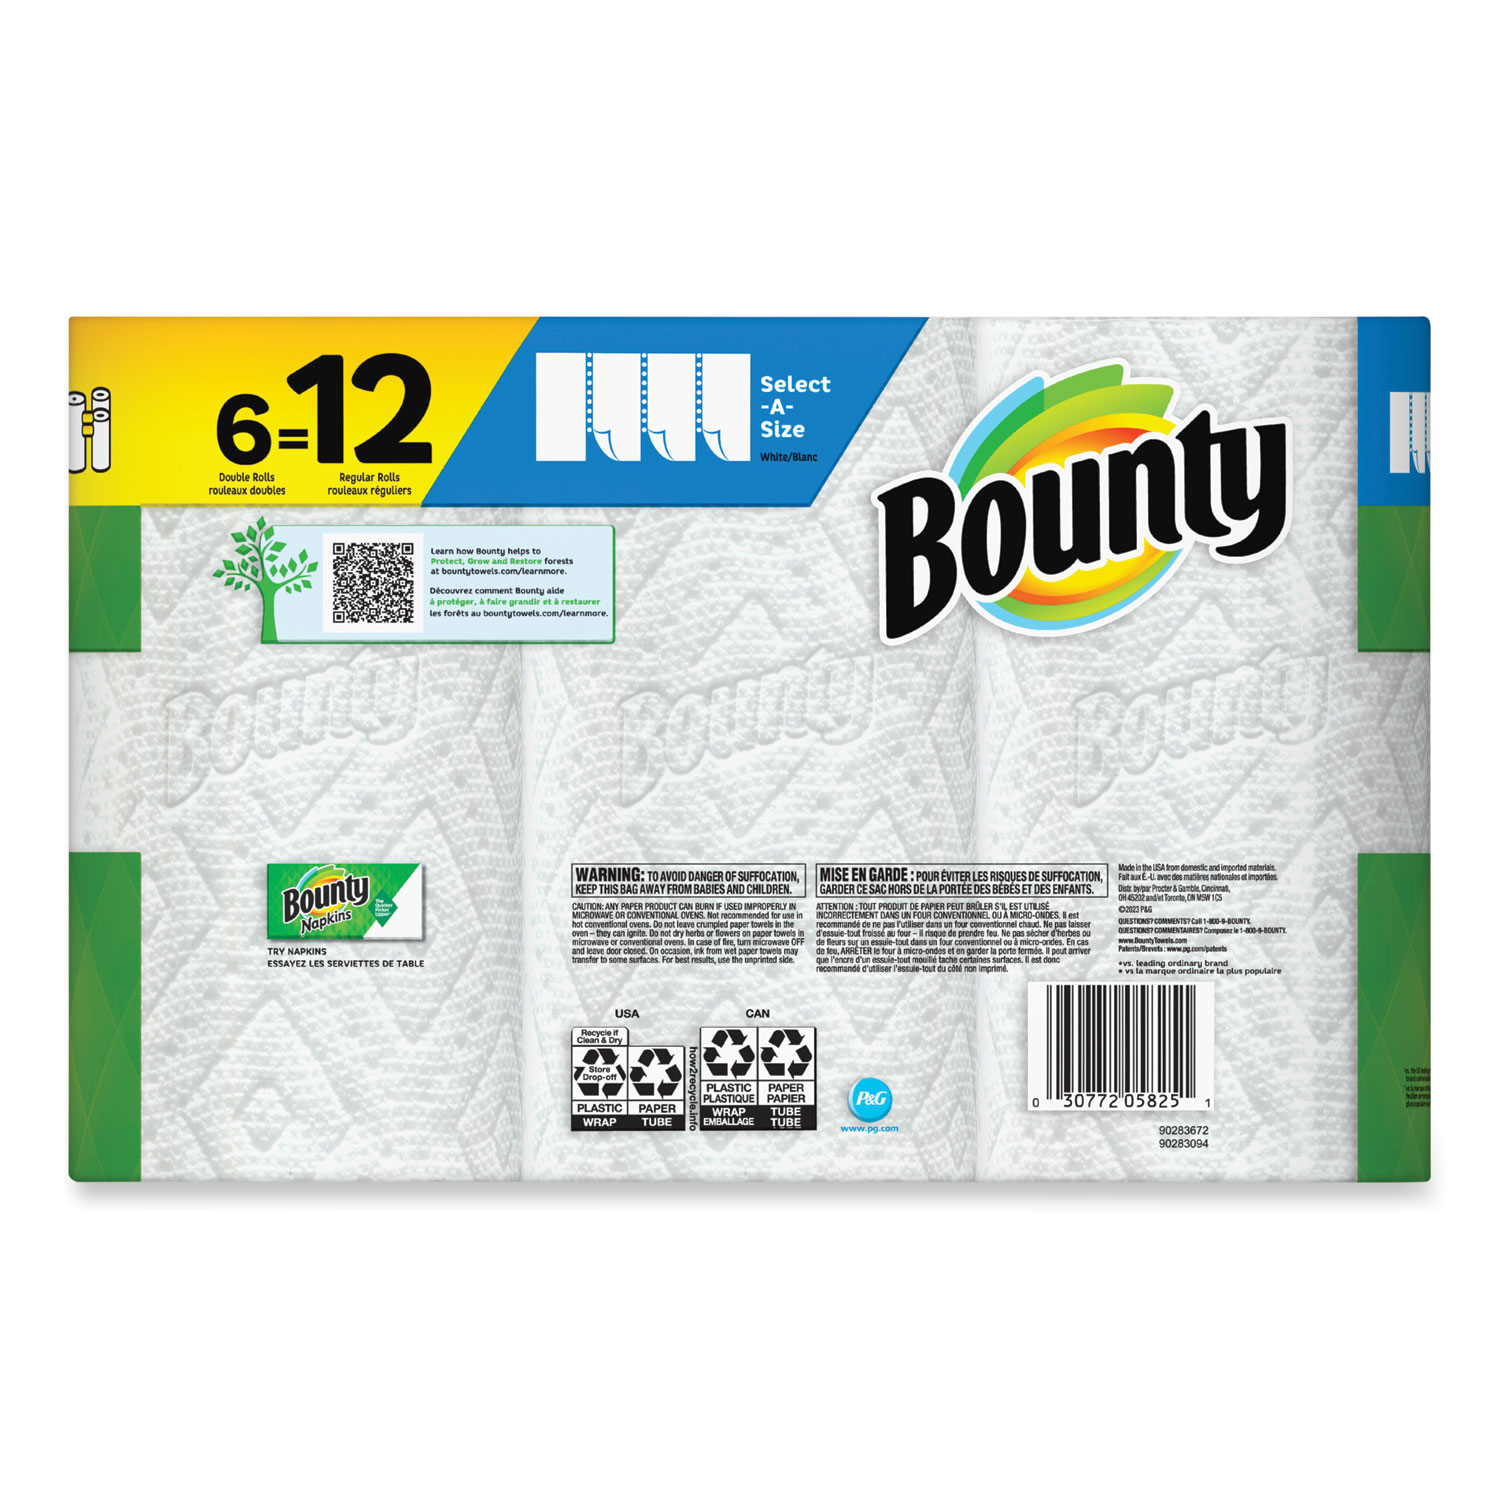 Bounty Full Sheet Double Rolls Paper Towels - Shop Paper Towels at H-E-B